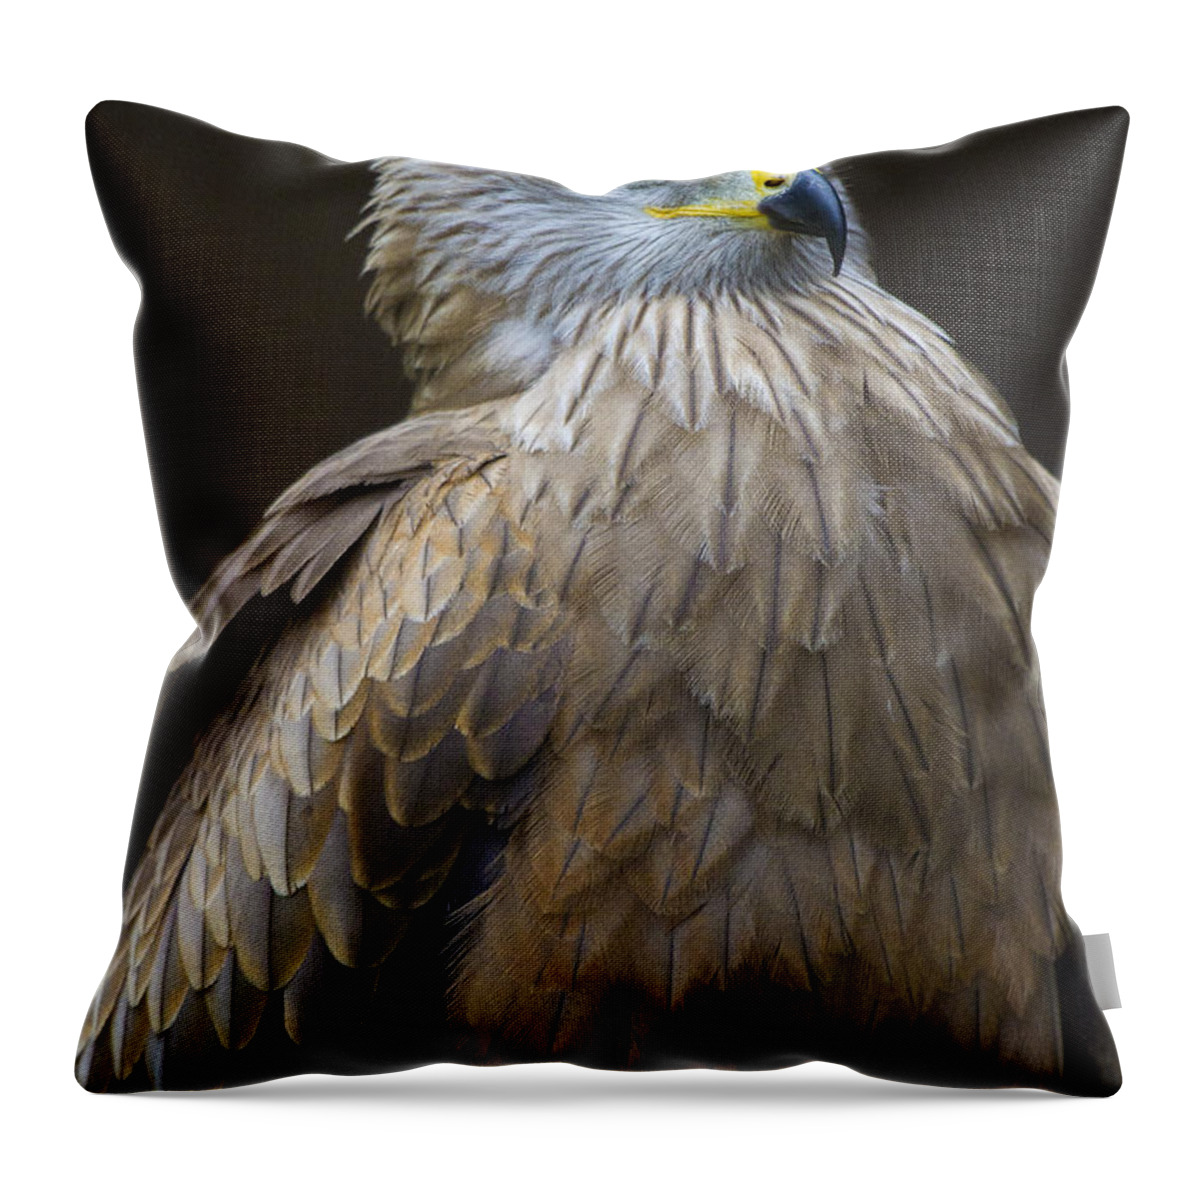 Bird Of Prey Throw Pillow featuring the photograph Black Kite 4 by Heiko Koehrer-Wagner